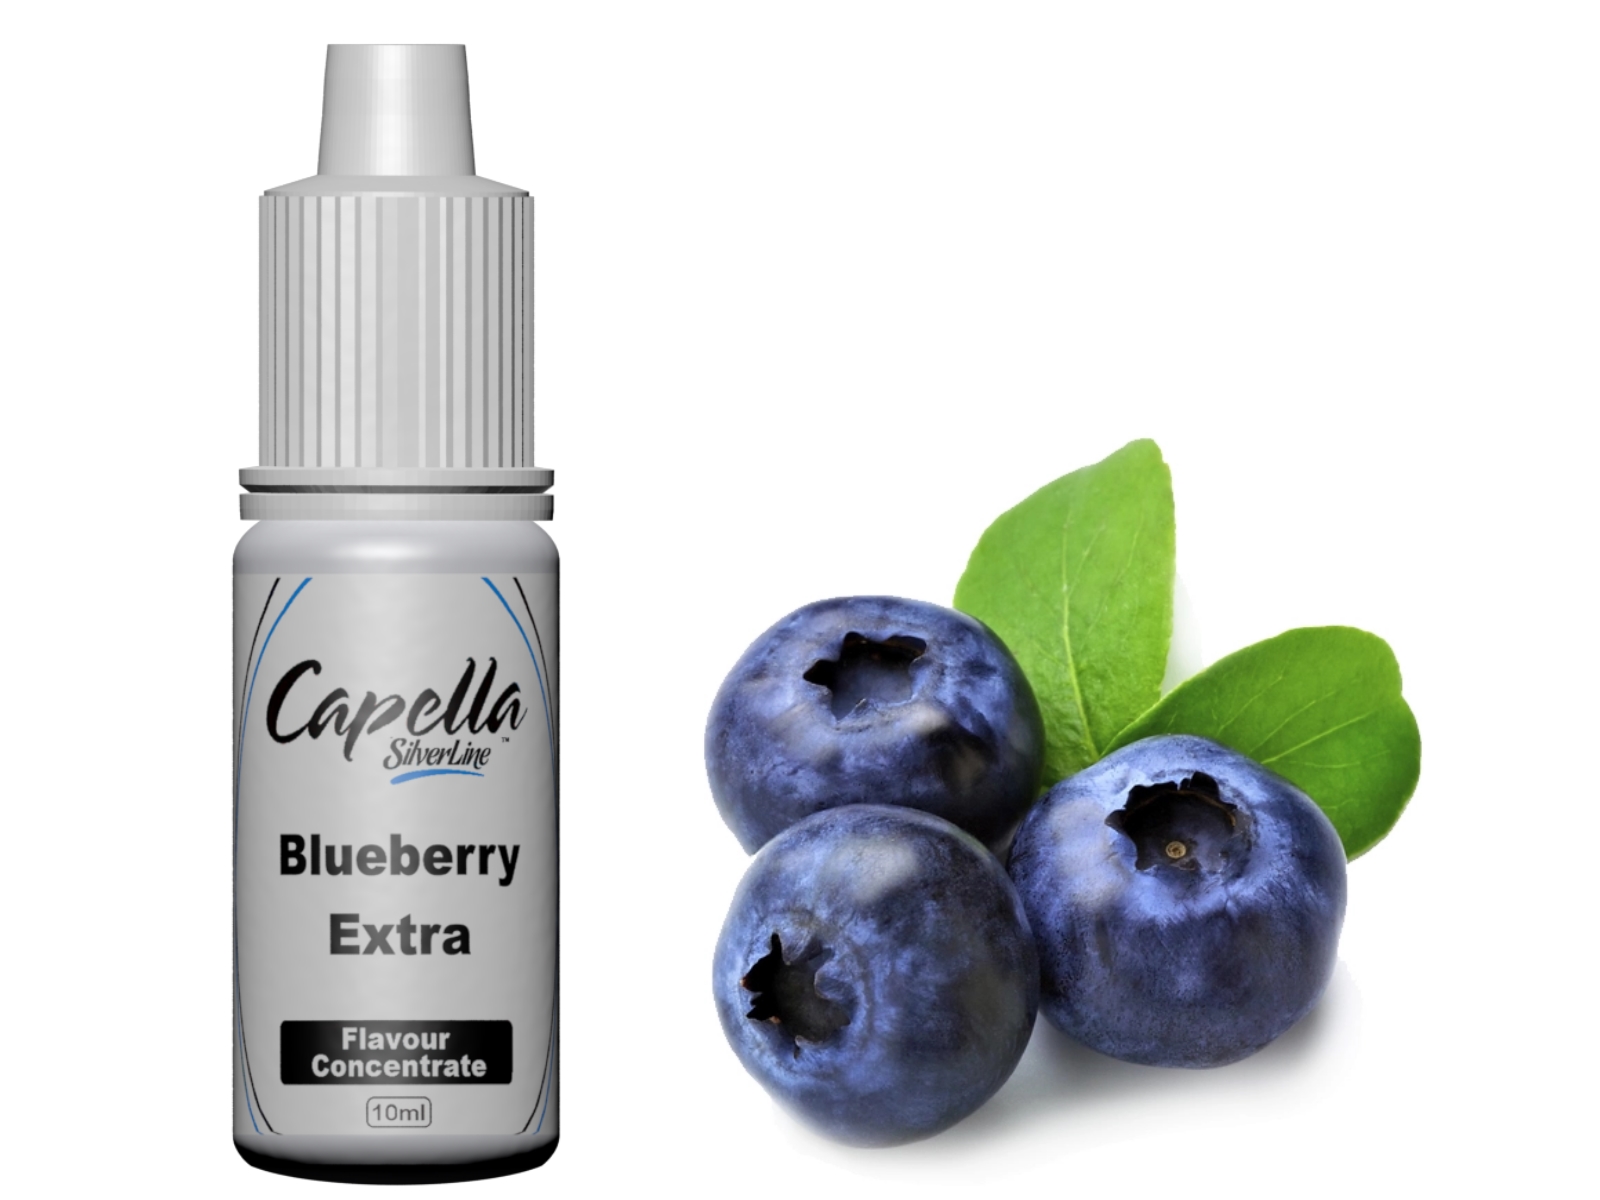 Capella Silverline Blueberry Extra